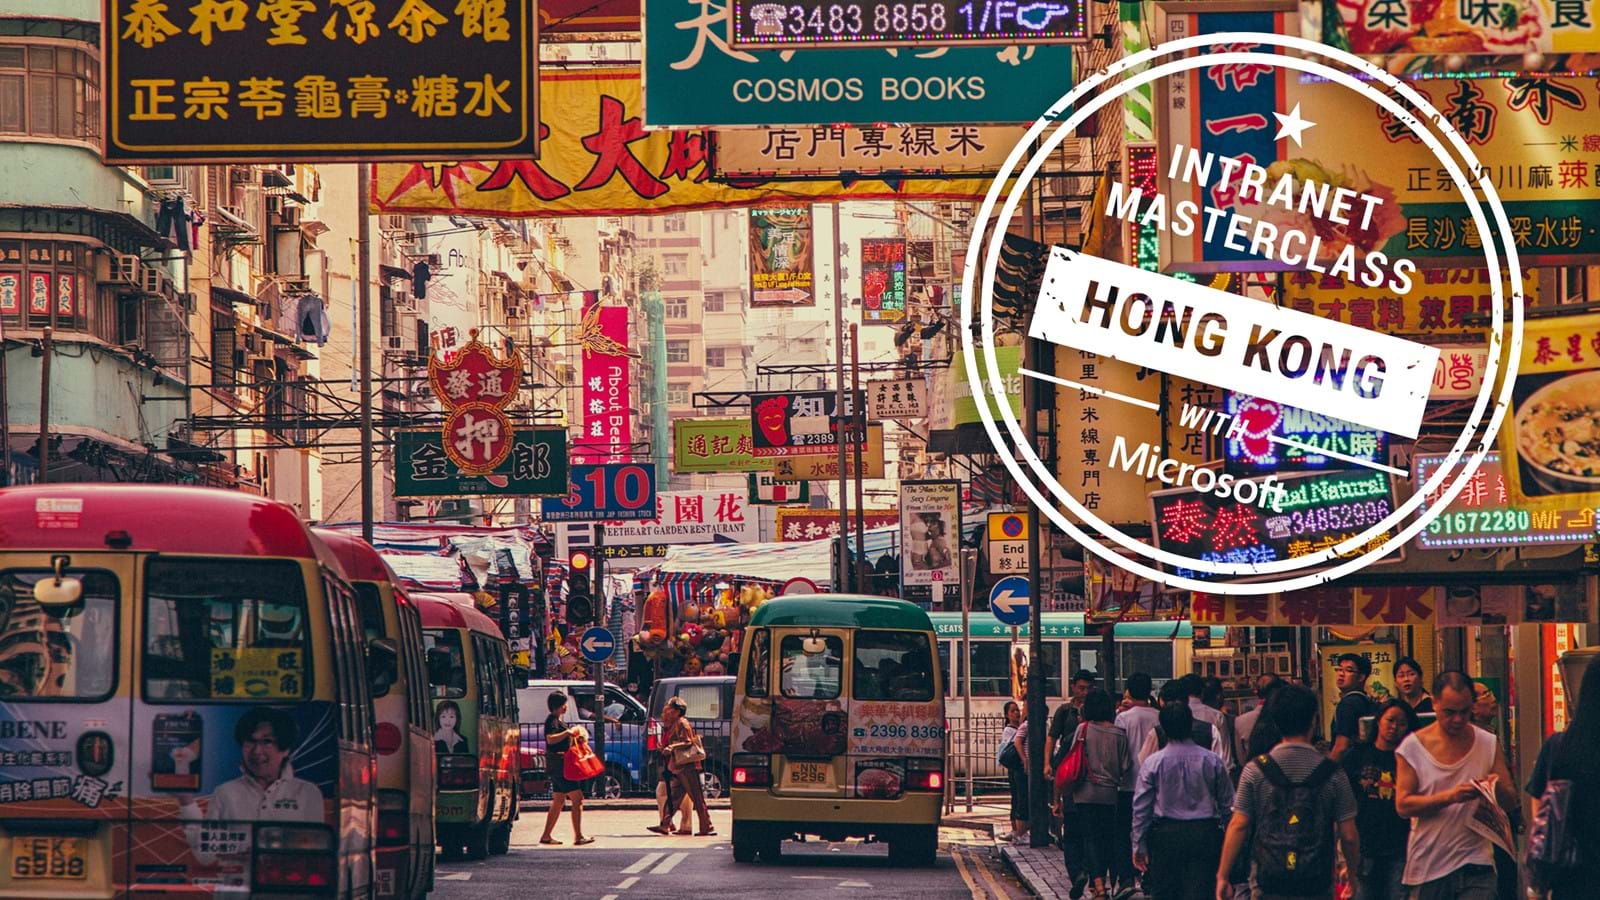 Unily's FREE Virtual Intranet Masterclass in Hong Kong